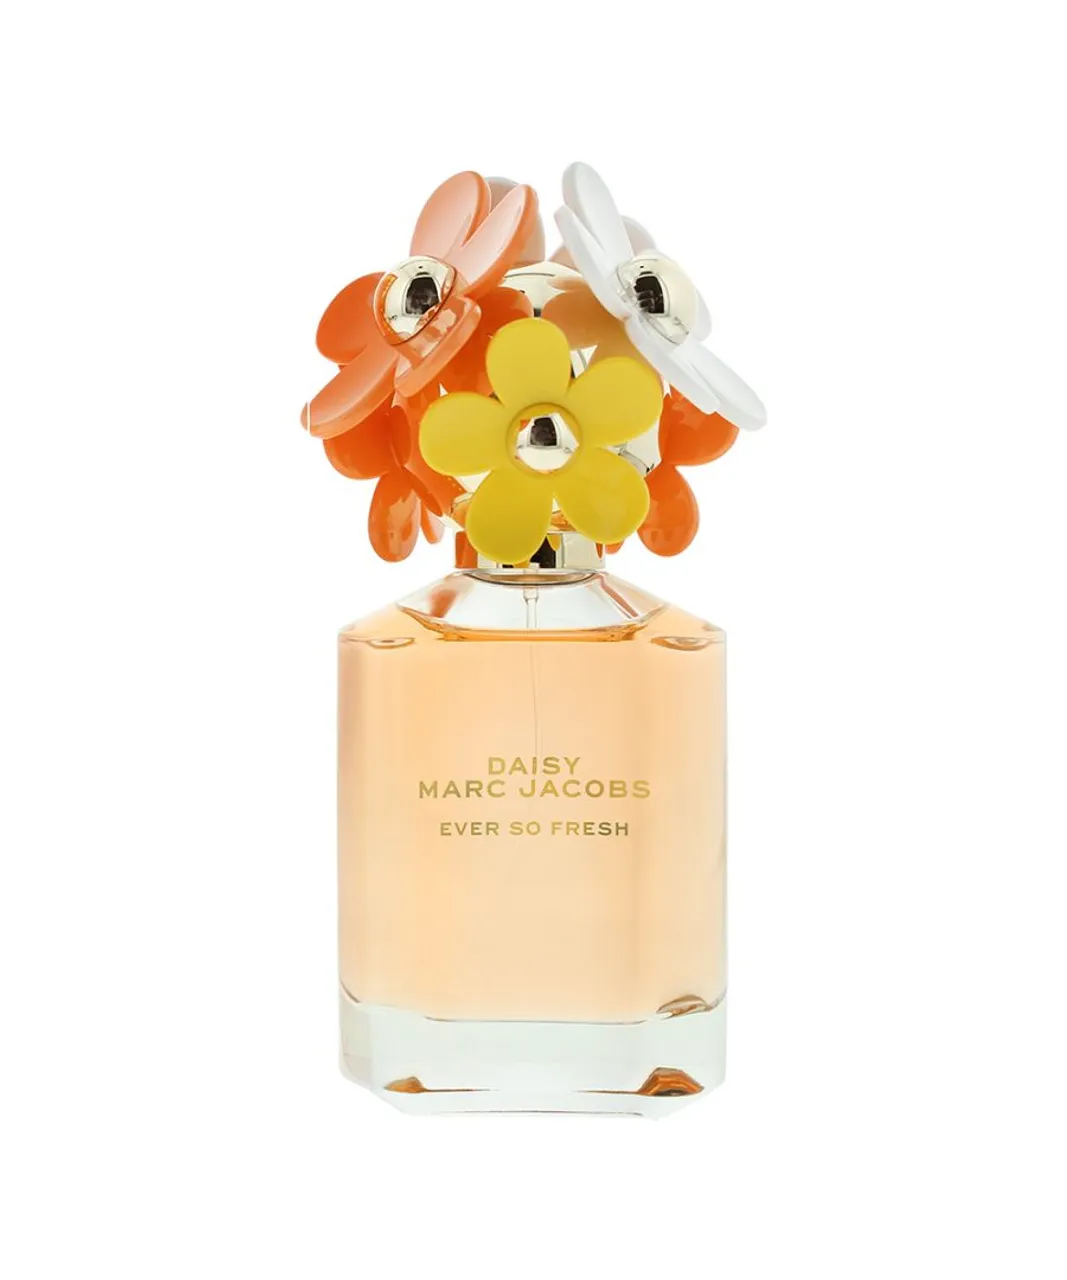 Marc Jacobs Womens Daisy Ever So Fresh Eau De Parfum 75ml Spray for Her - One Size